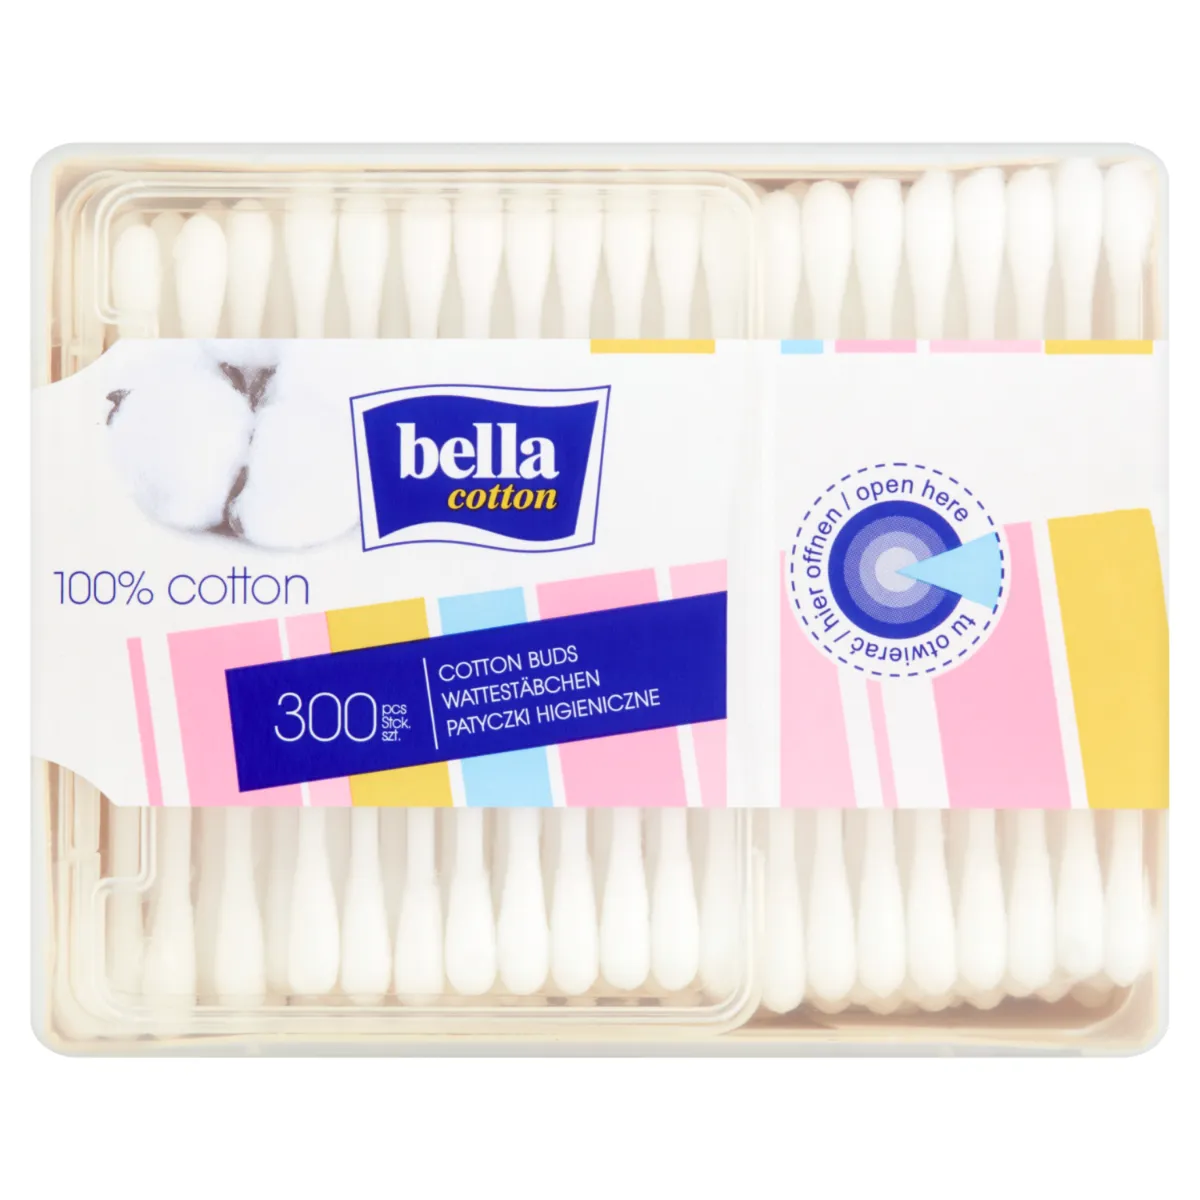 Bella Cotton, patyczki higieniczne, 300 sztuk